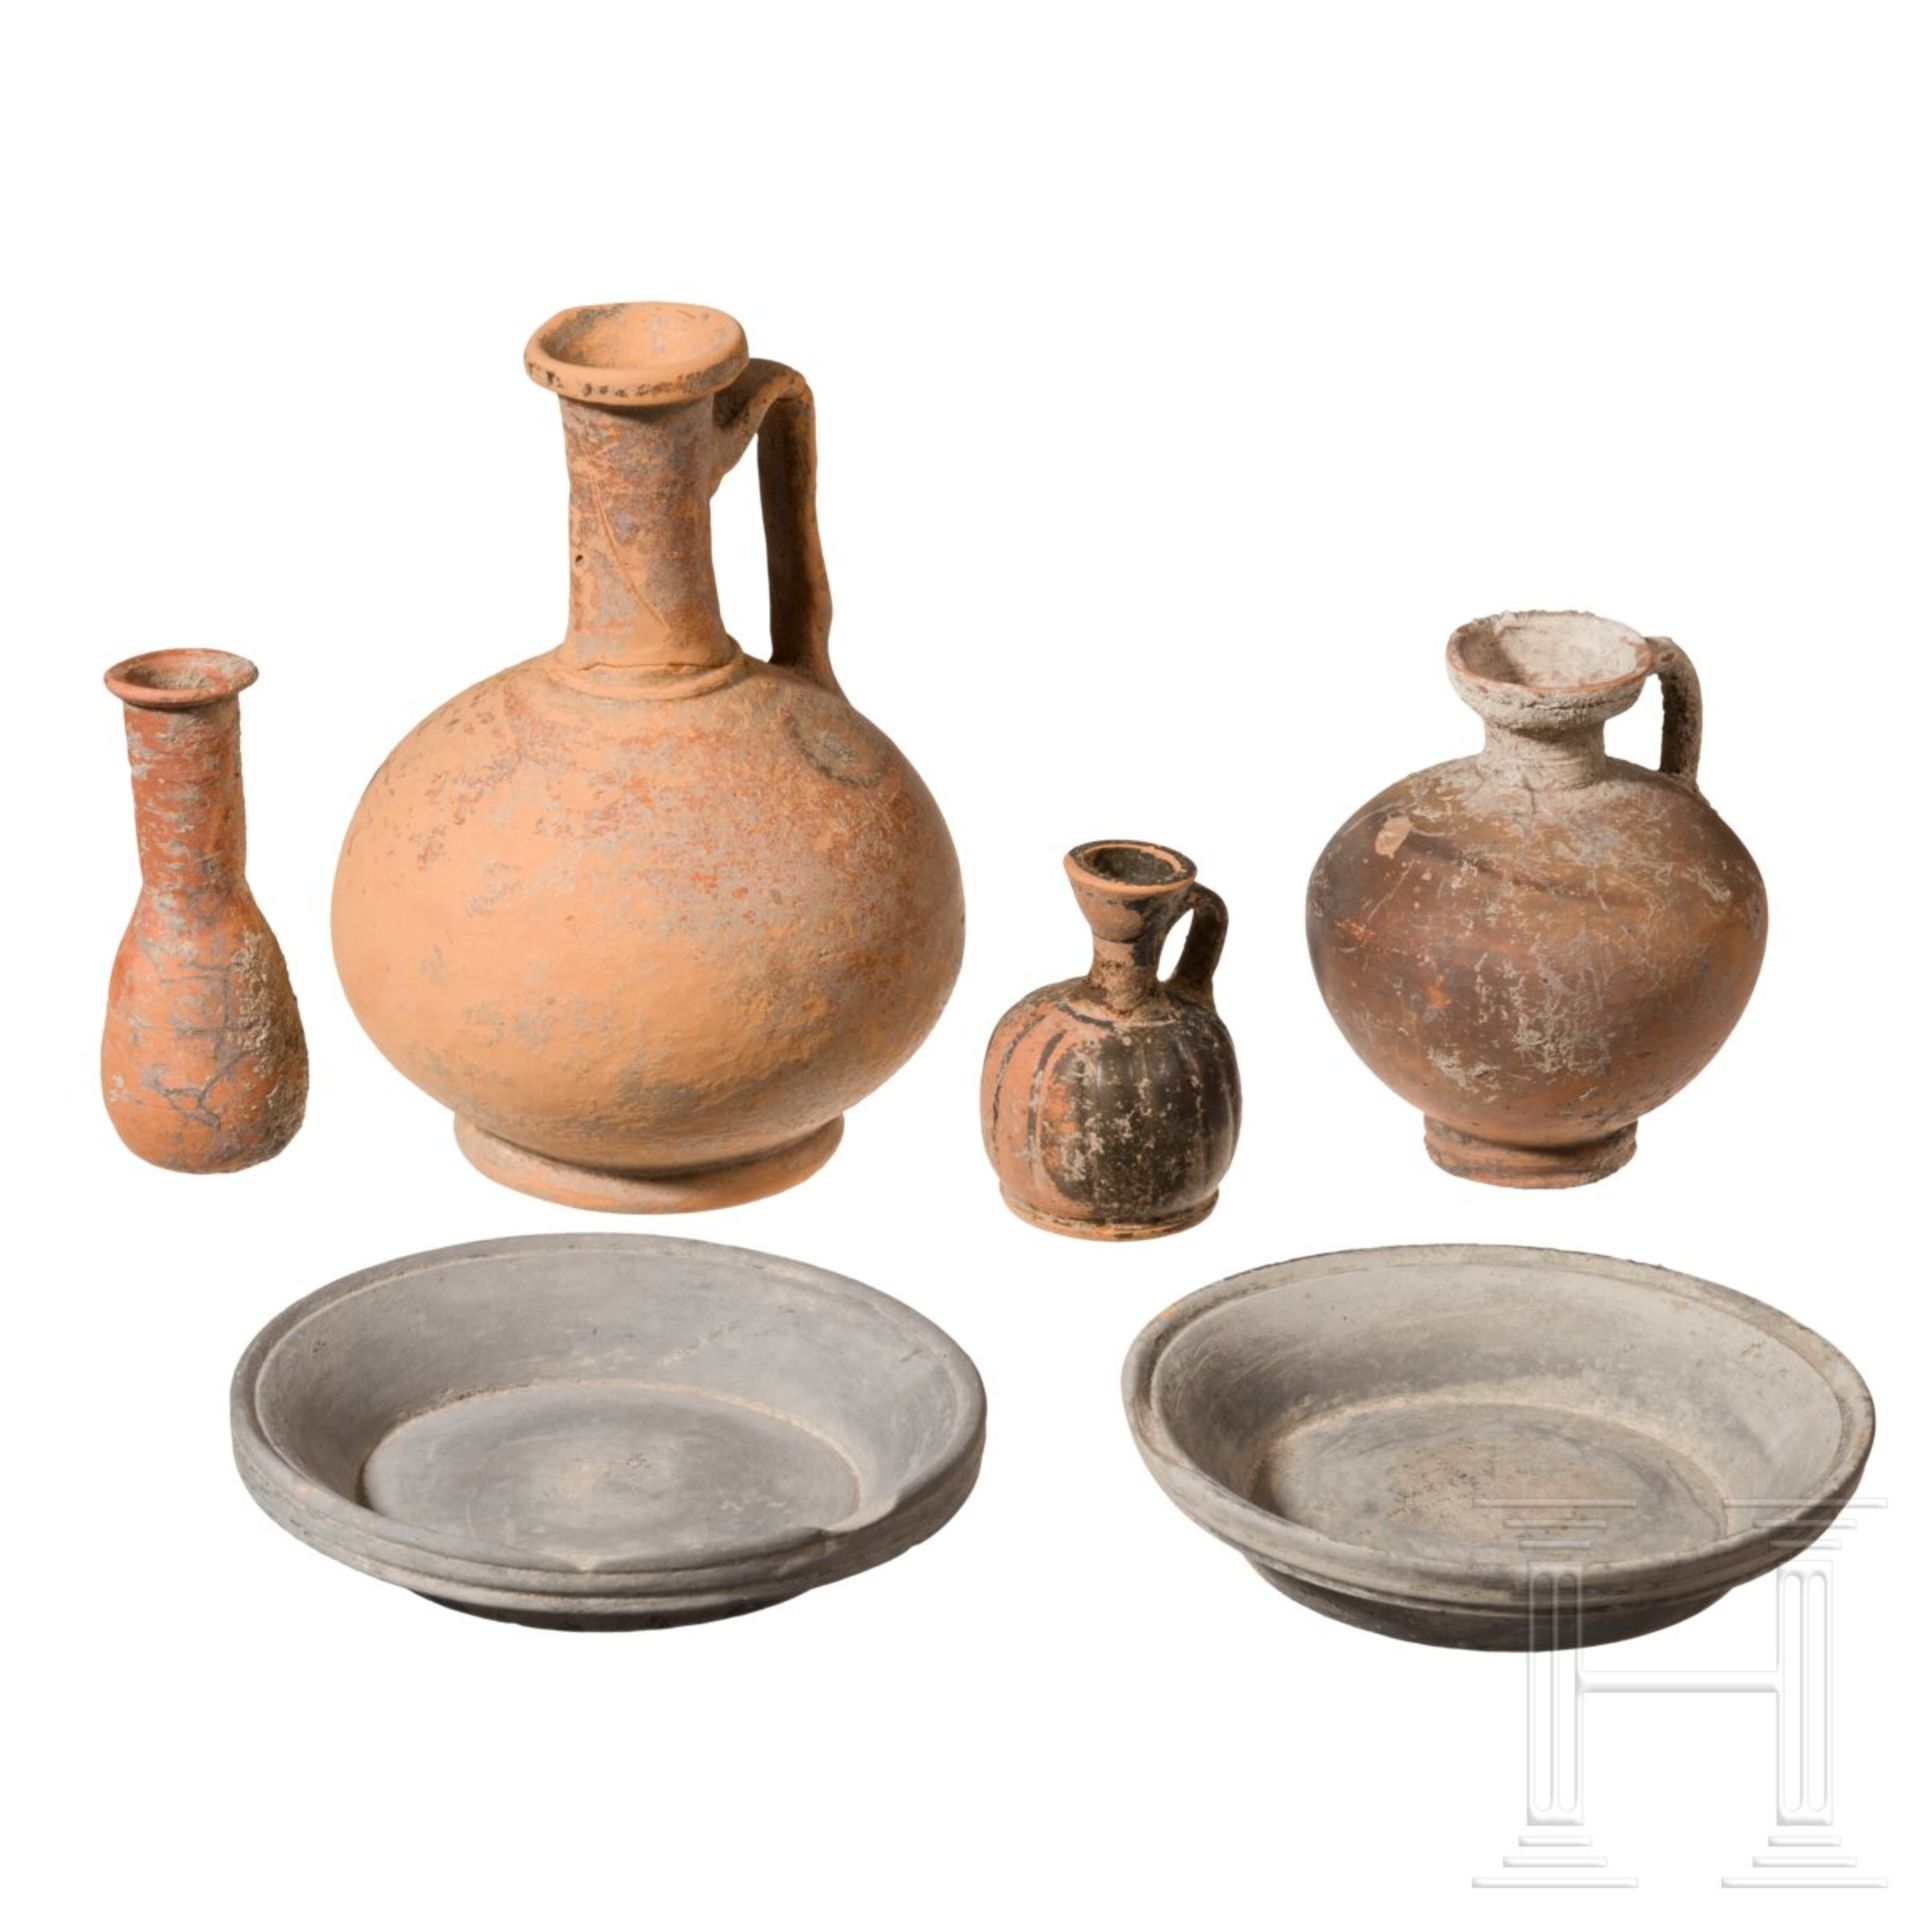 Sechs antike Keramiken, meist römisch, 3. Jhdt. v. - 3. Jhdt. n. Chr.